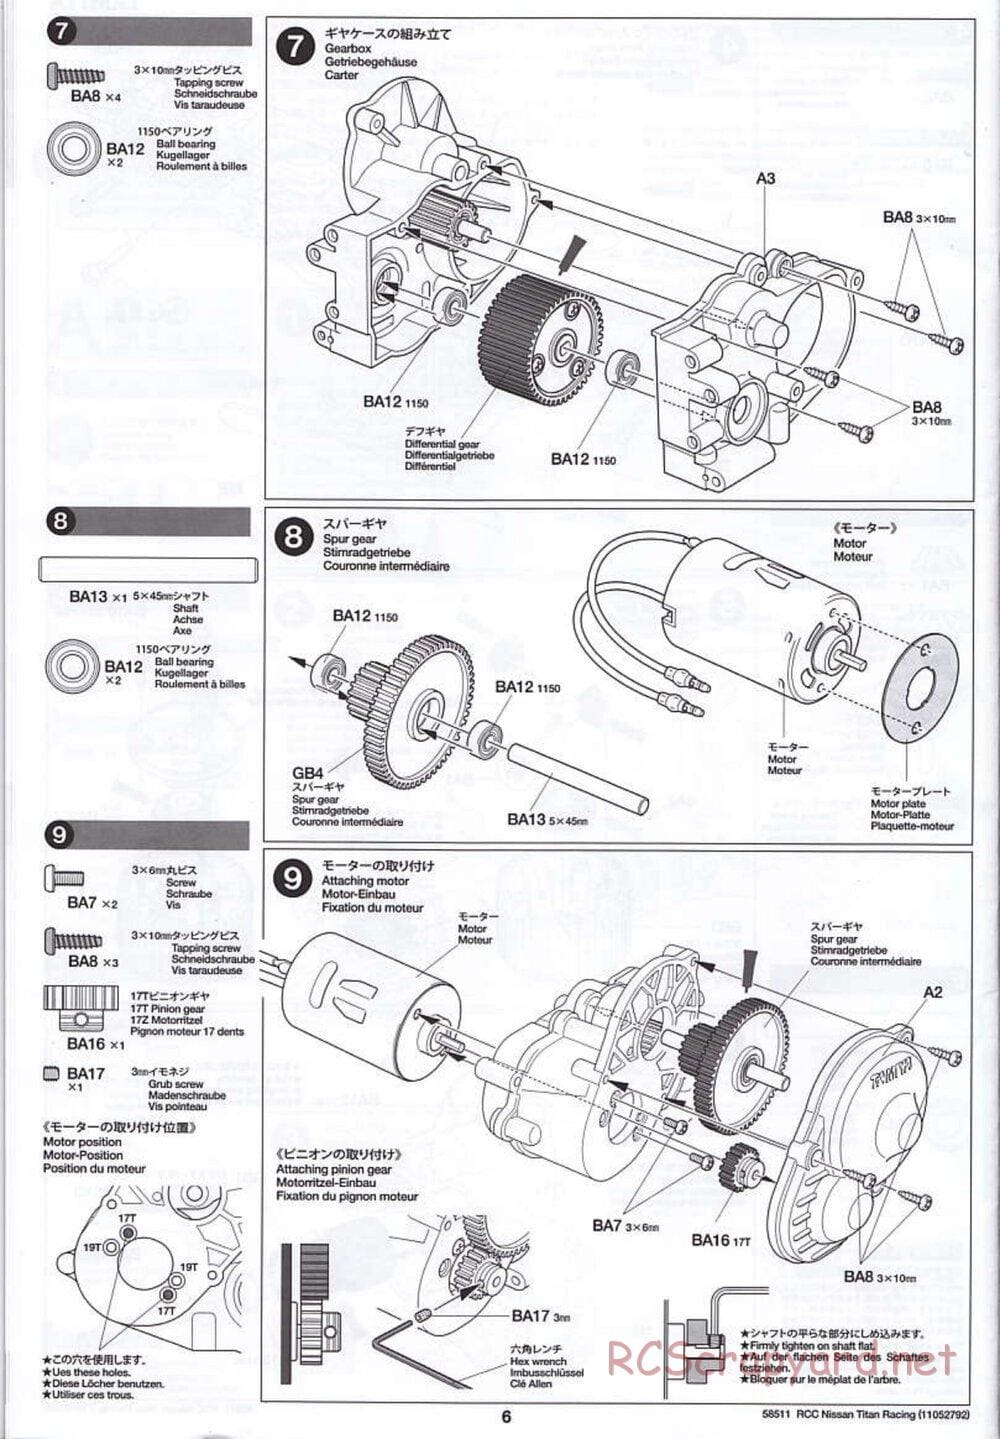 Tamiya - Nissan Titan Chassis - Manual - Page 6